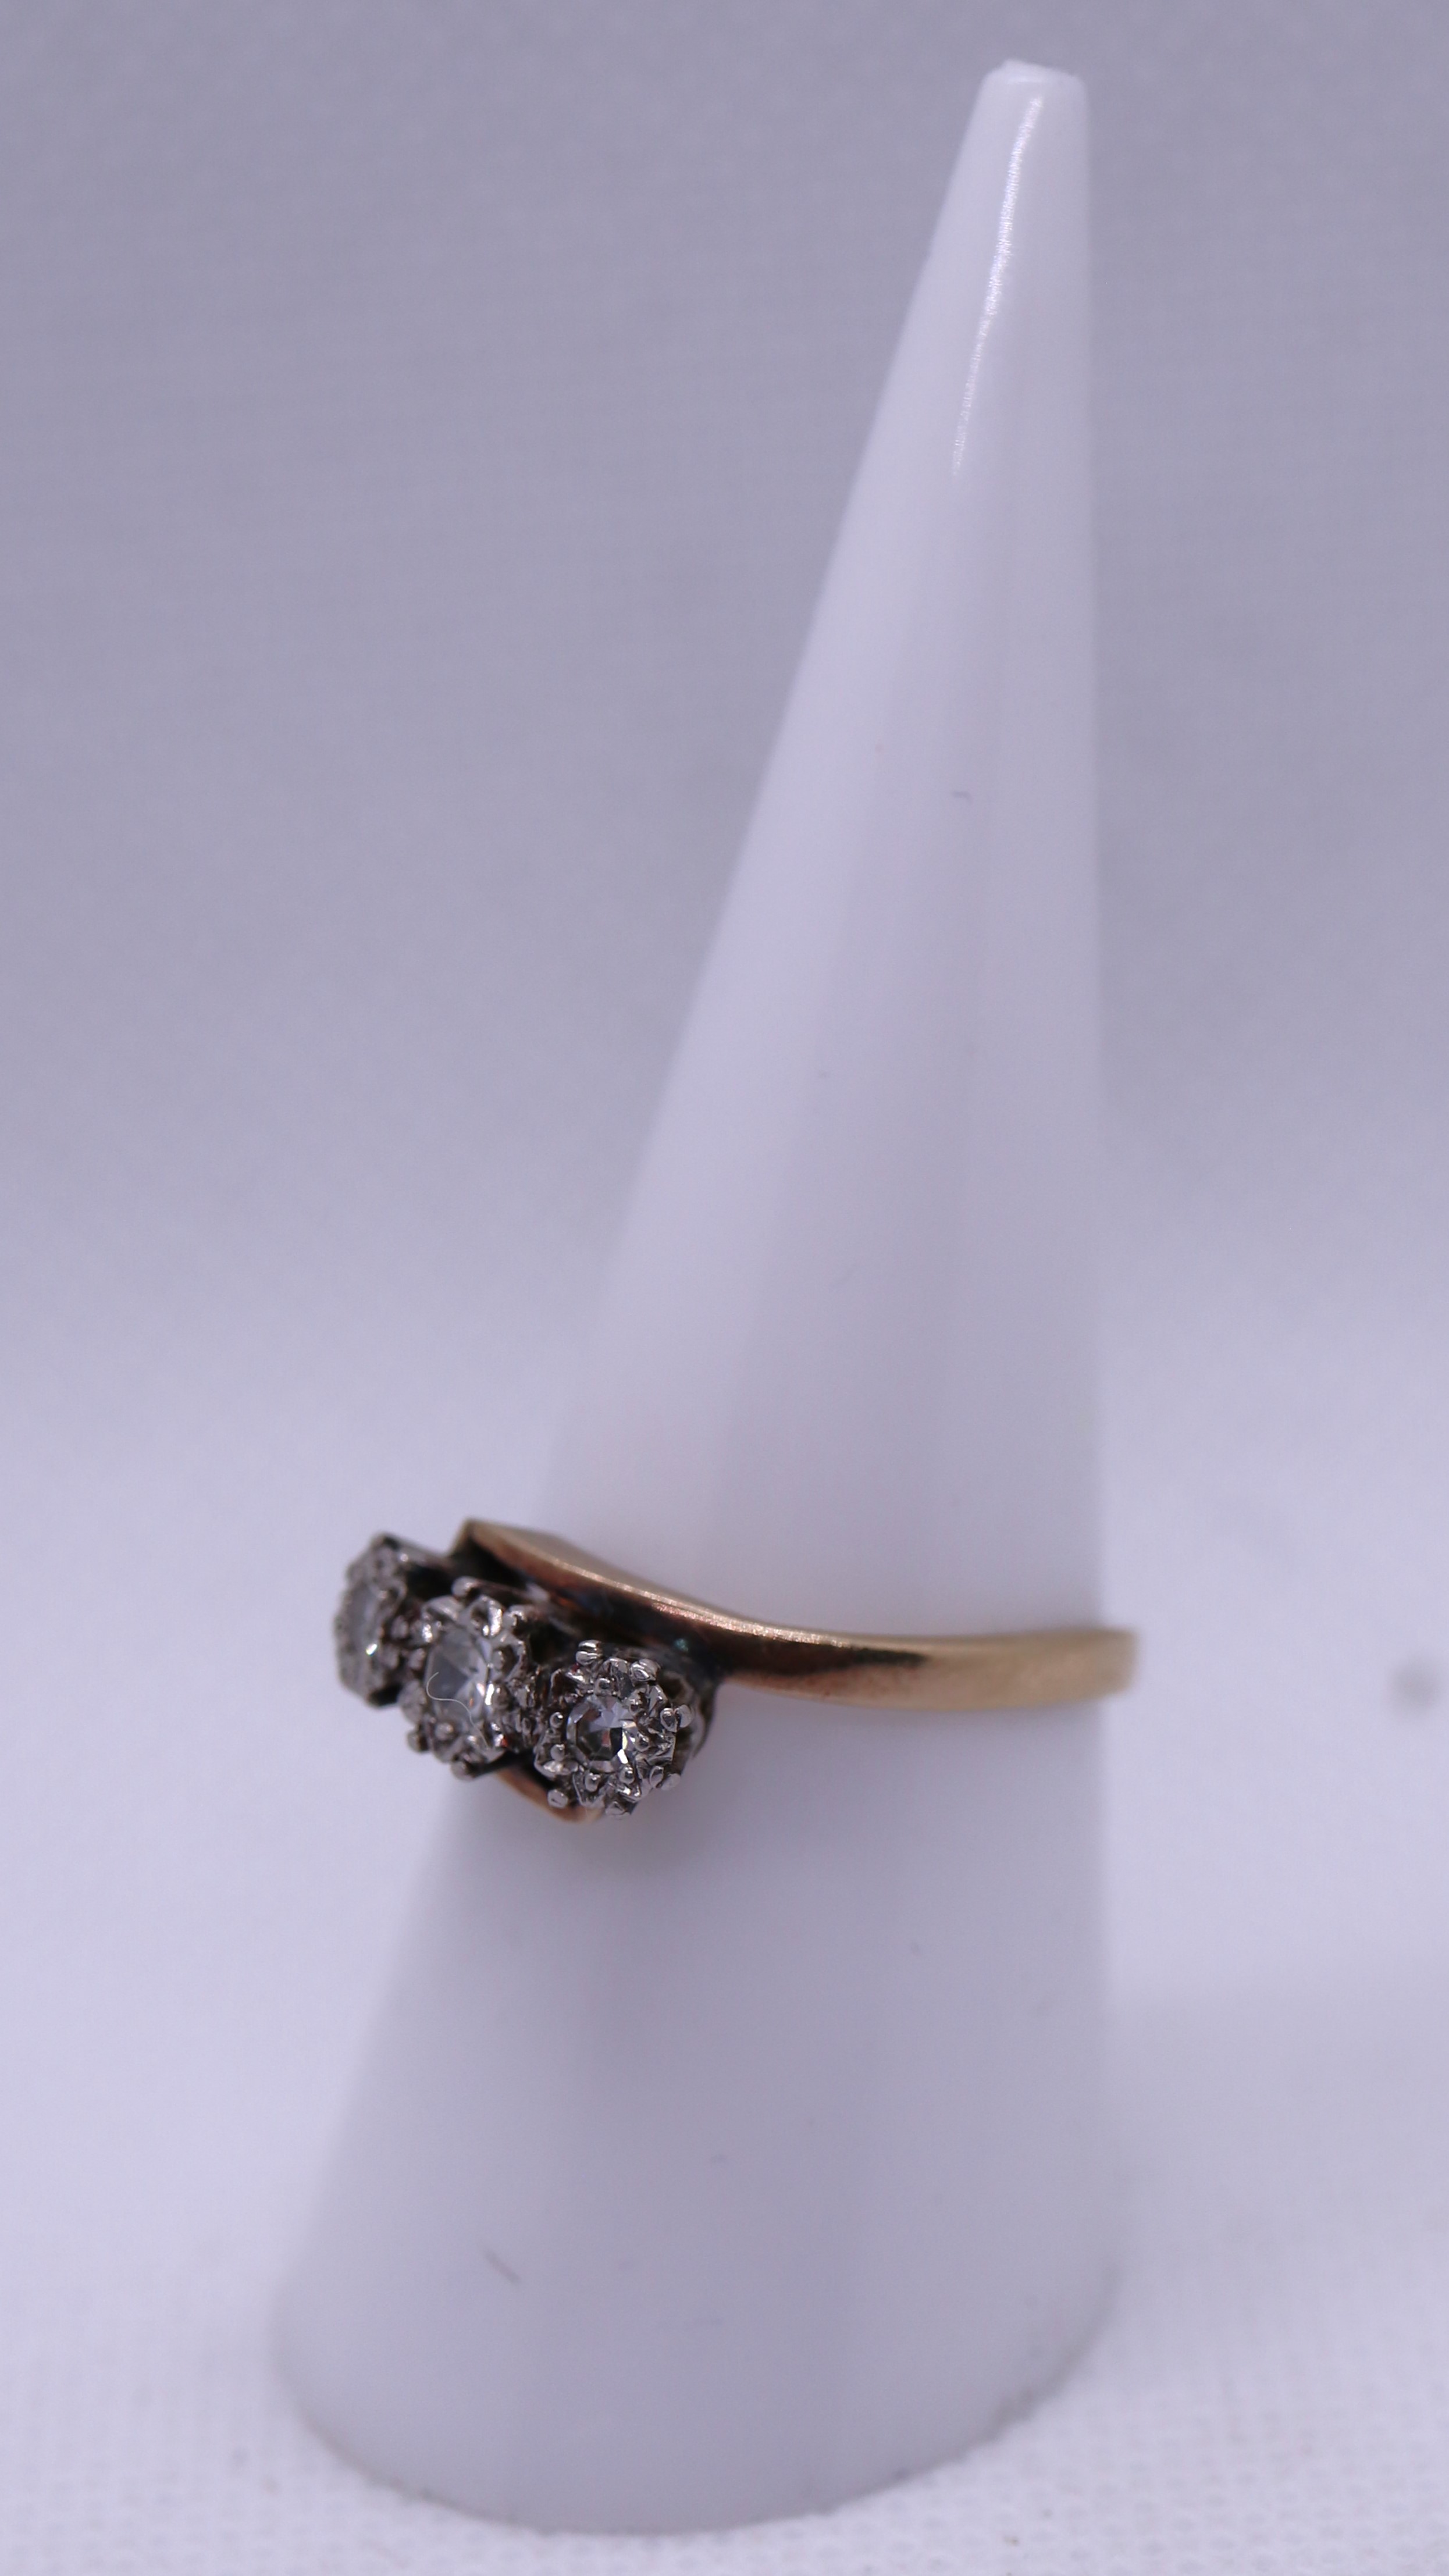 9ct gold 3 stone diamond ring - Size P - Image 2 of 3